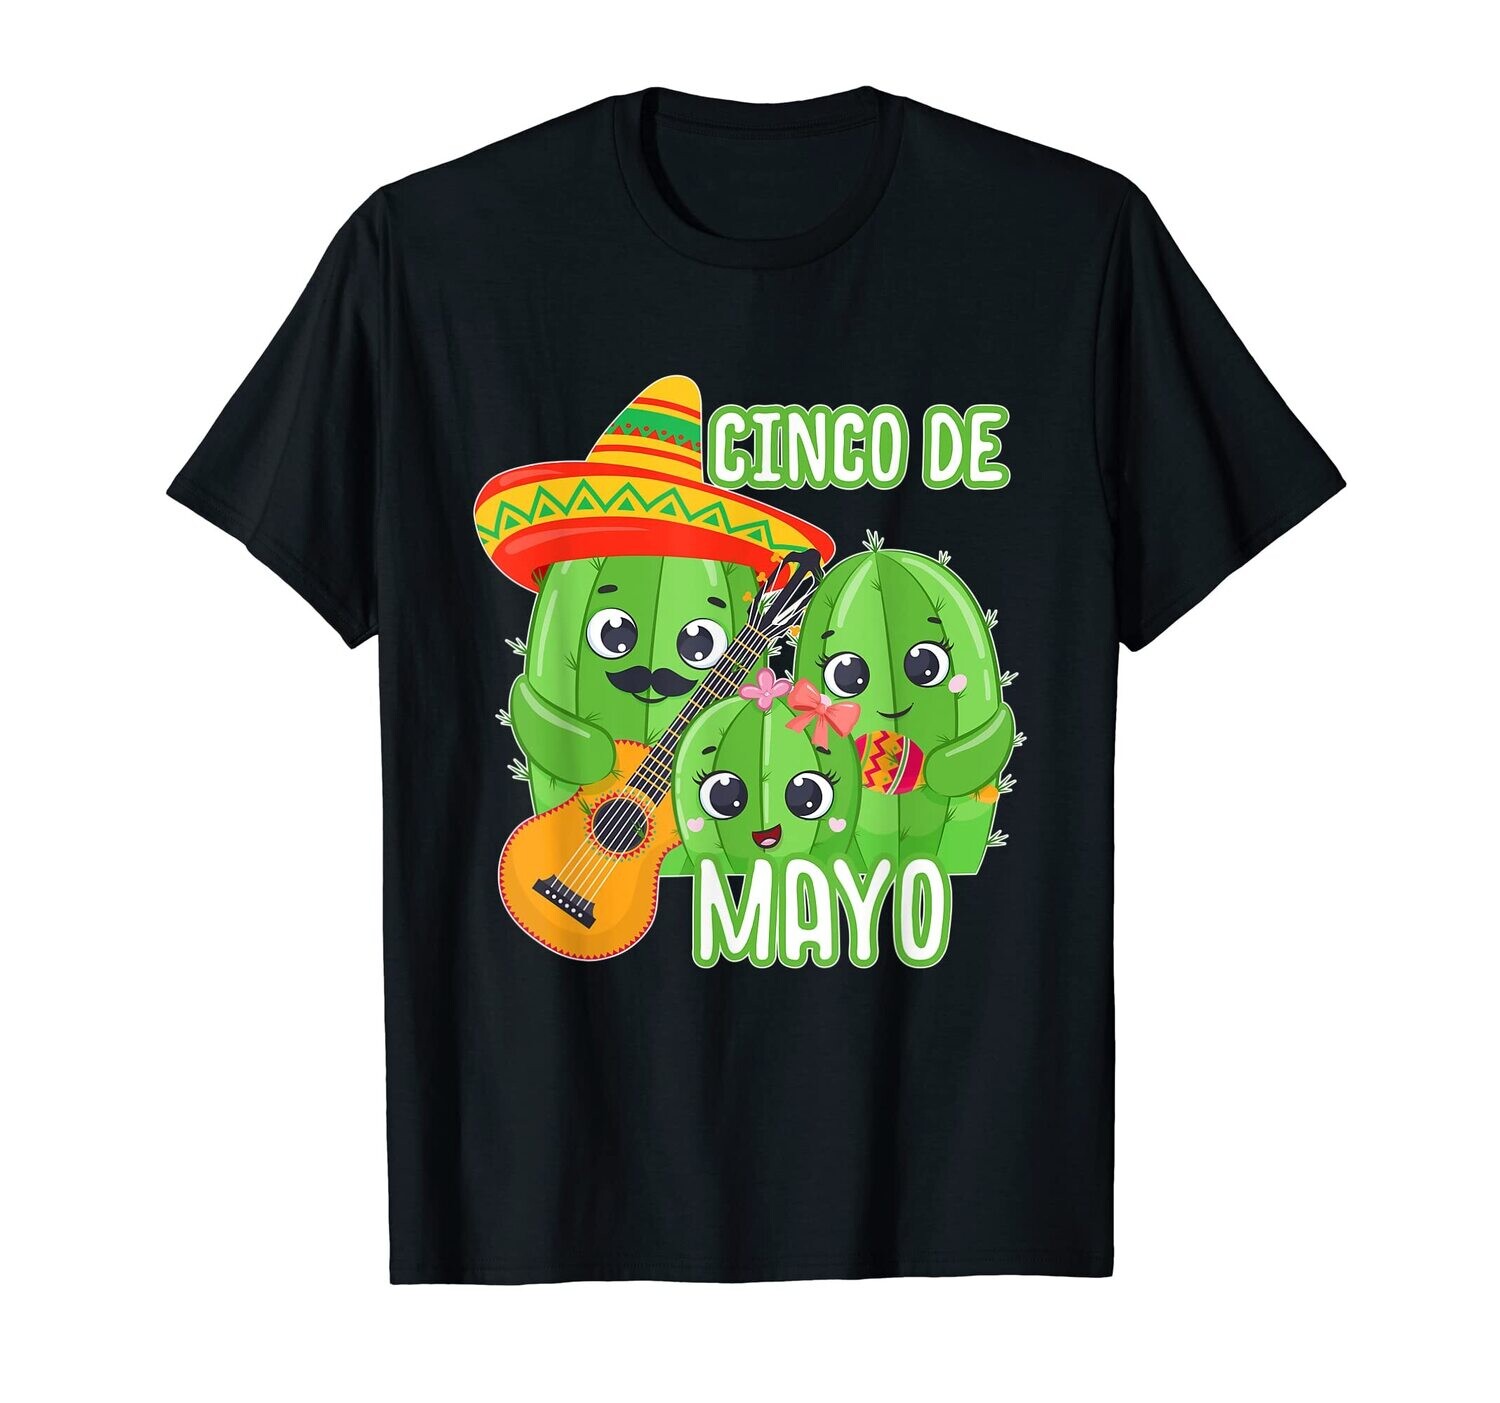 Cinco de mayo cactus graphic T-shirt